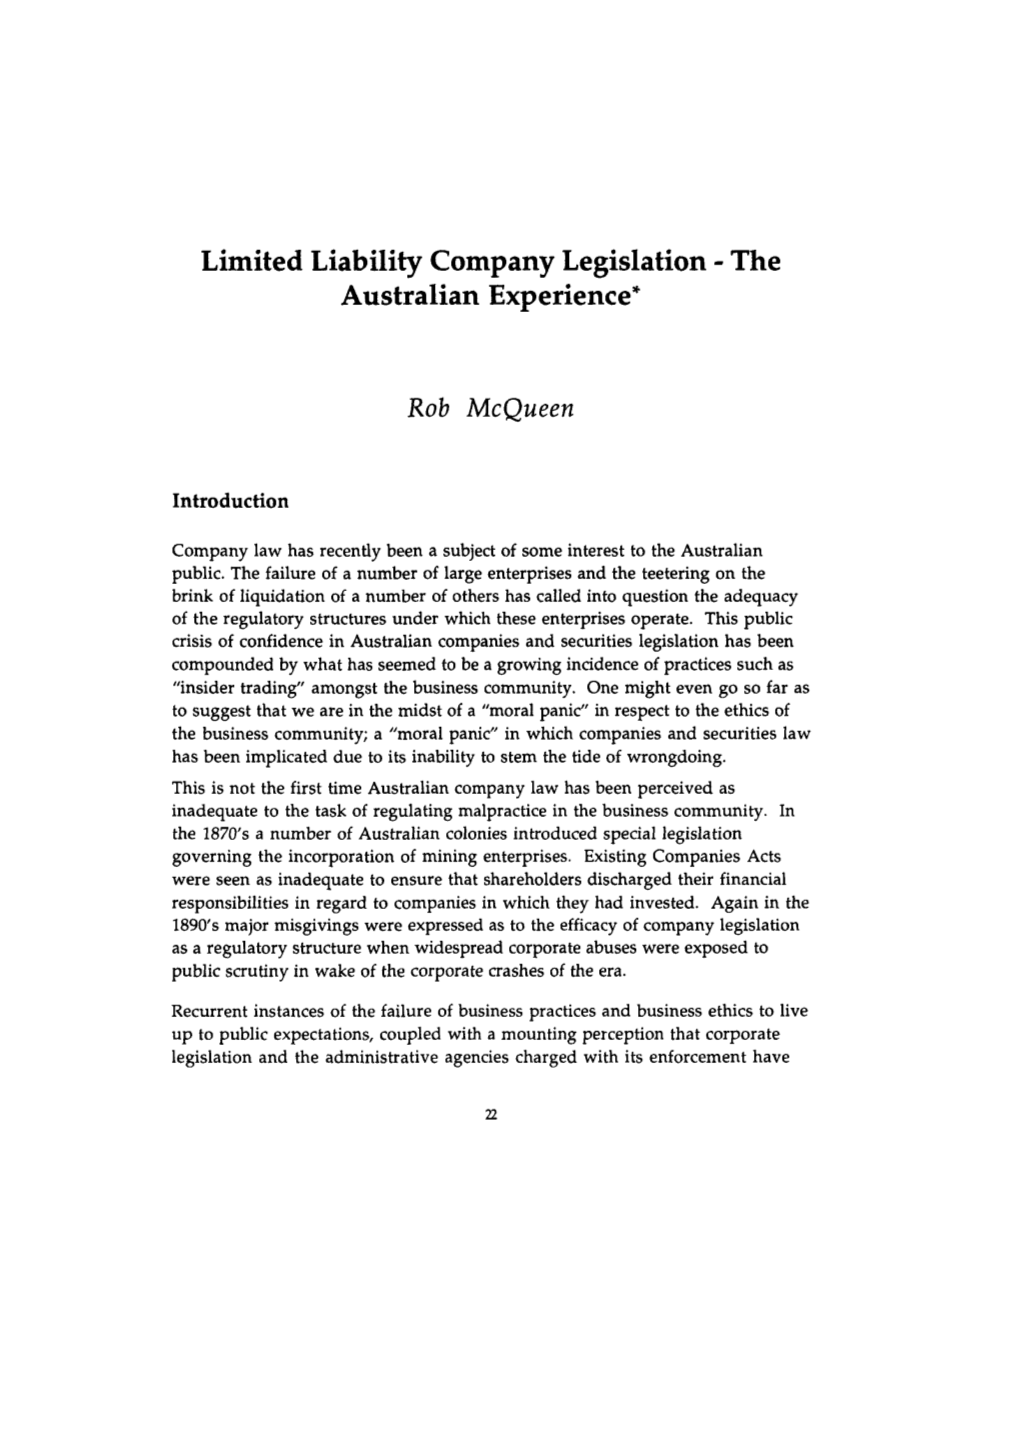 Limited Liability Company Legislation - the Australian Experience*